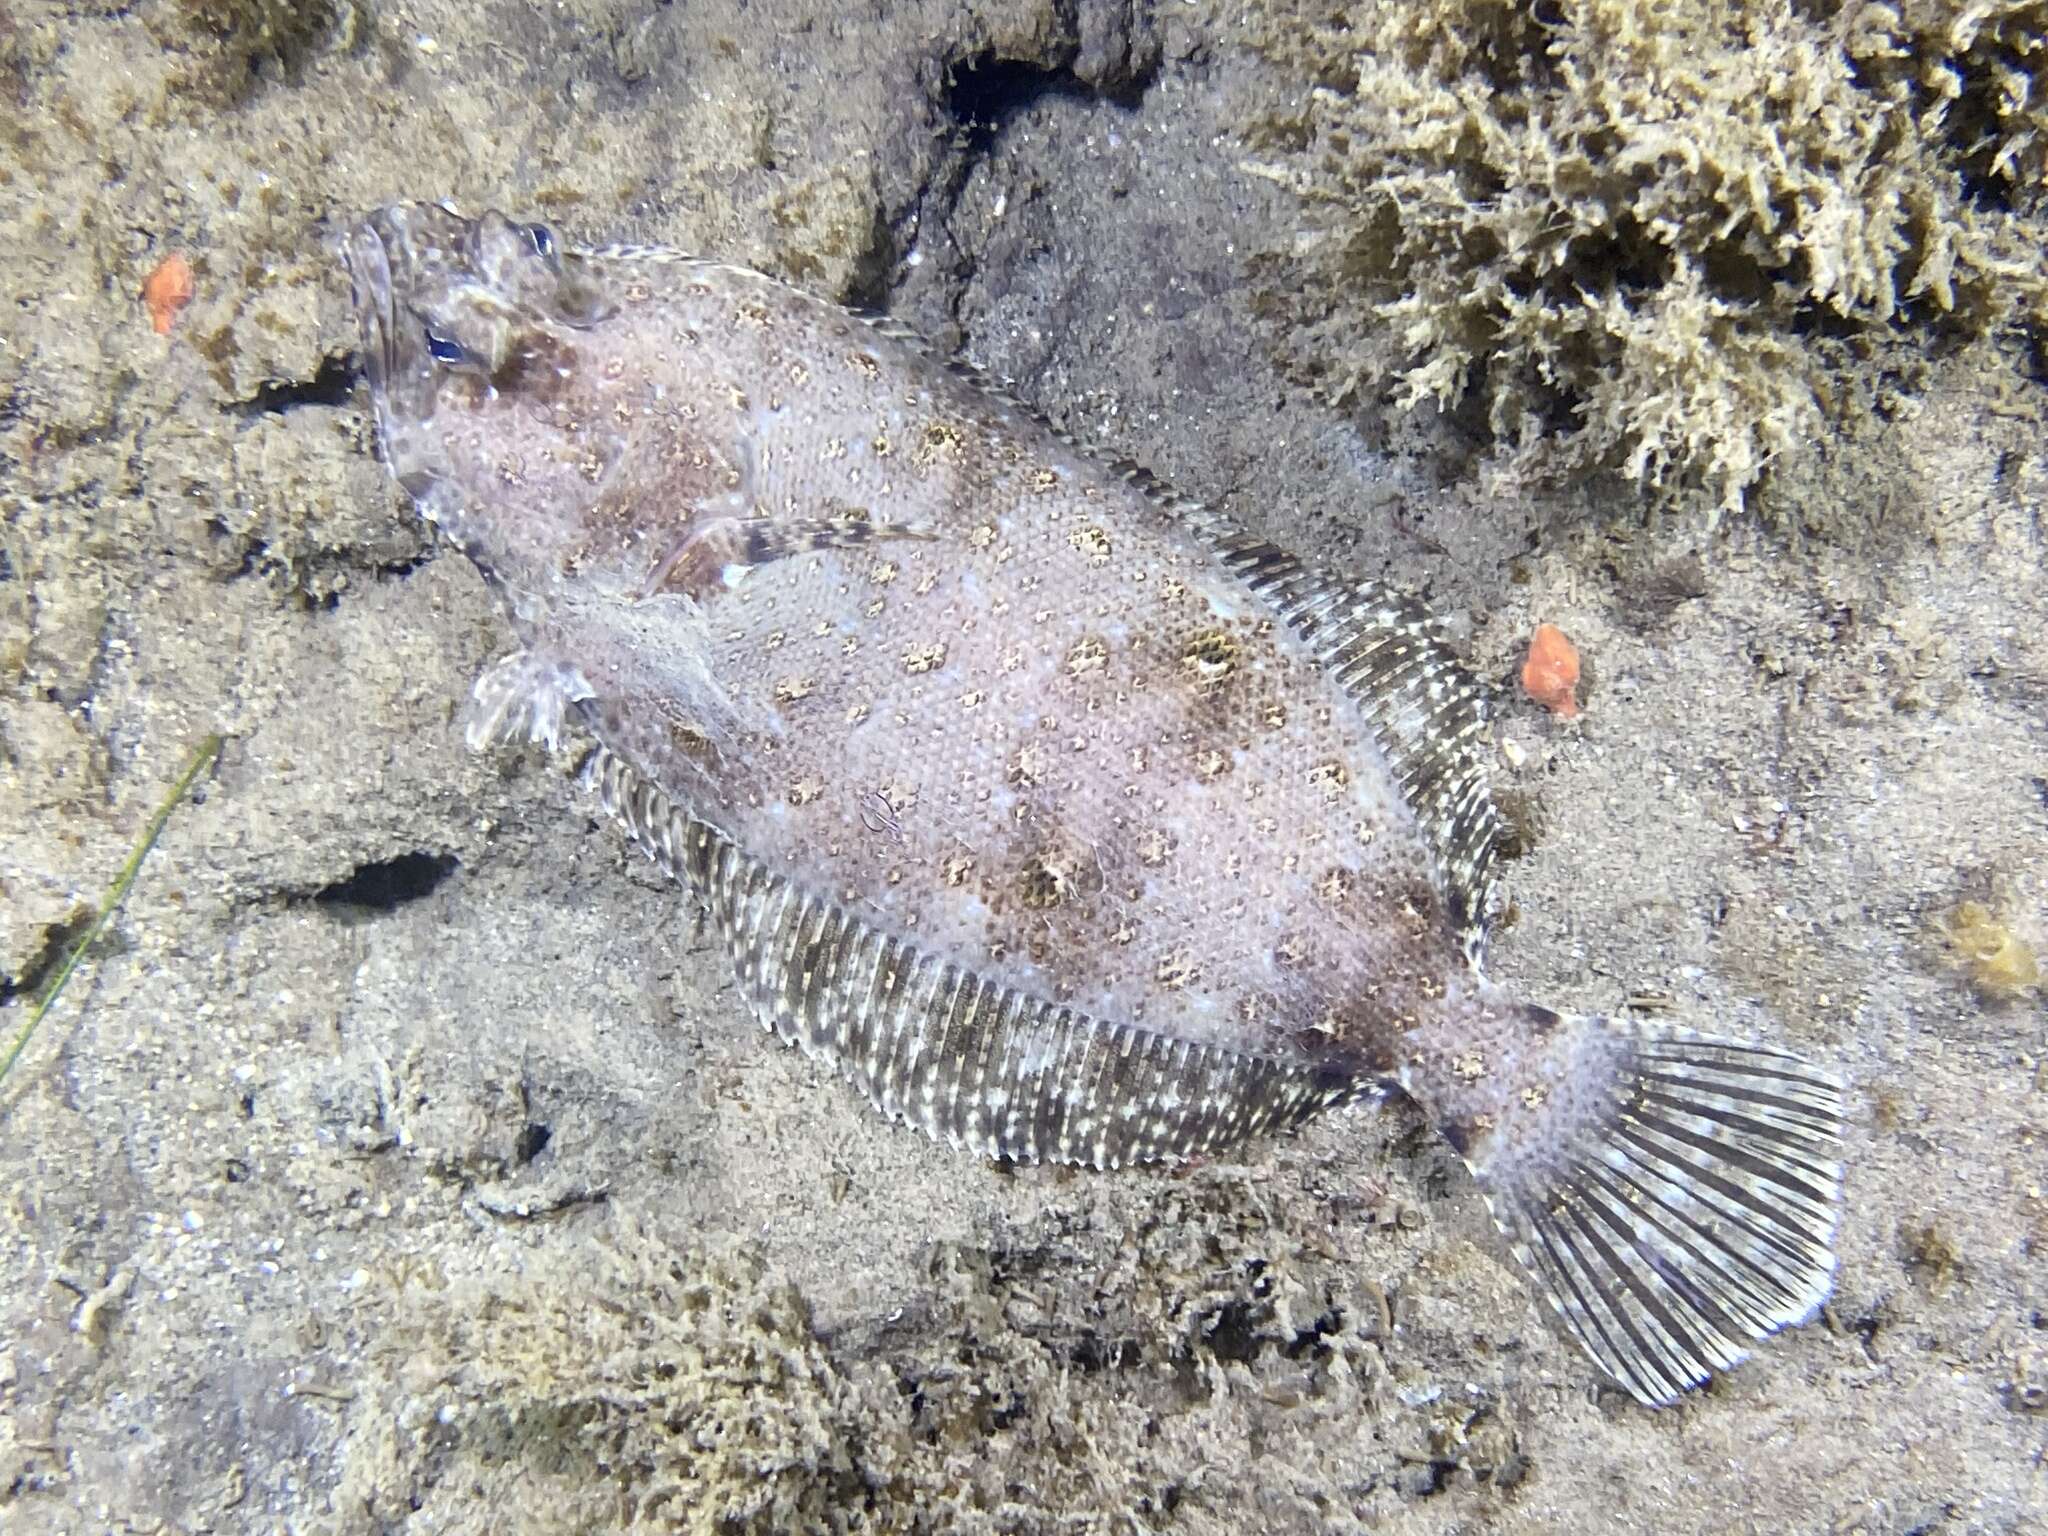 Image of Bigmouth flounder